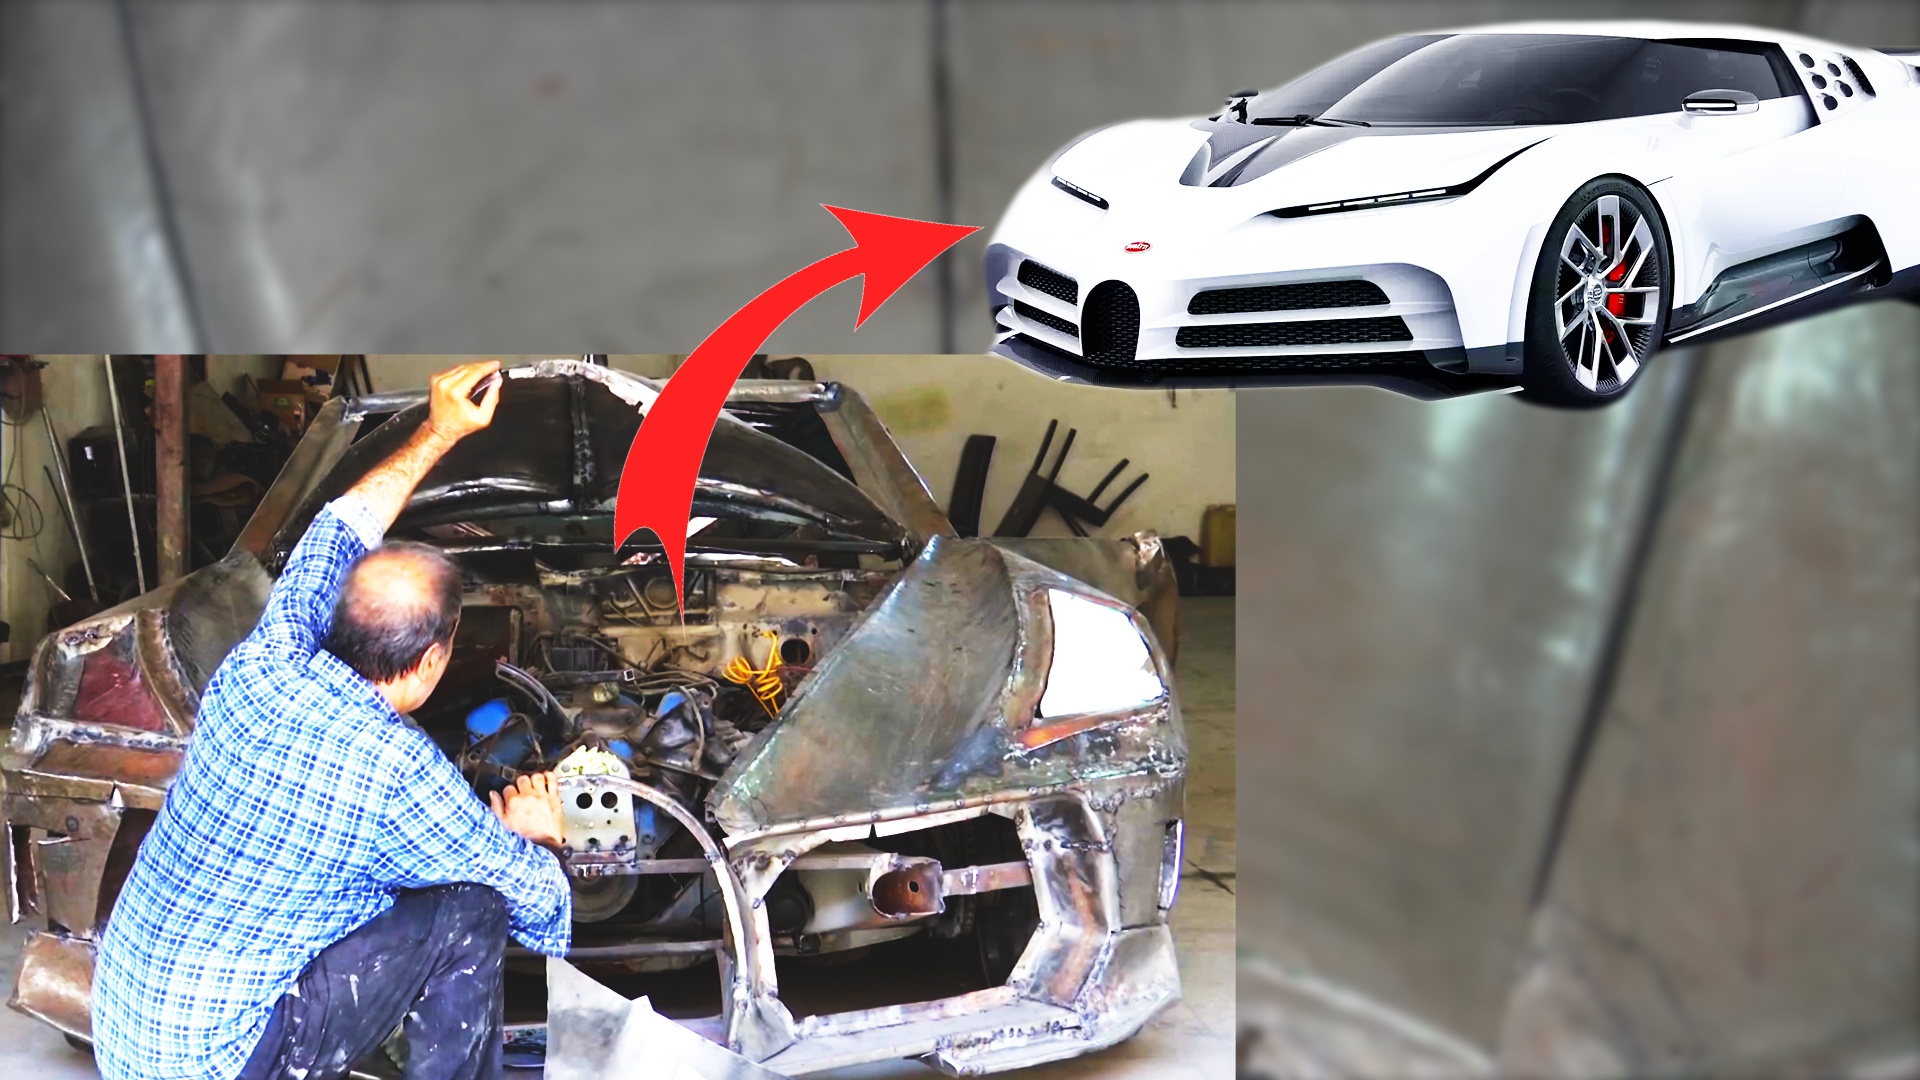 Иранец в одиночку создаёт копию гиперкара Bugatti